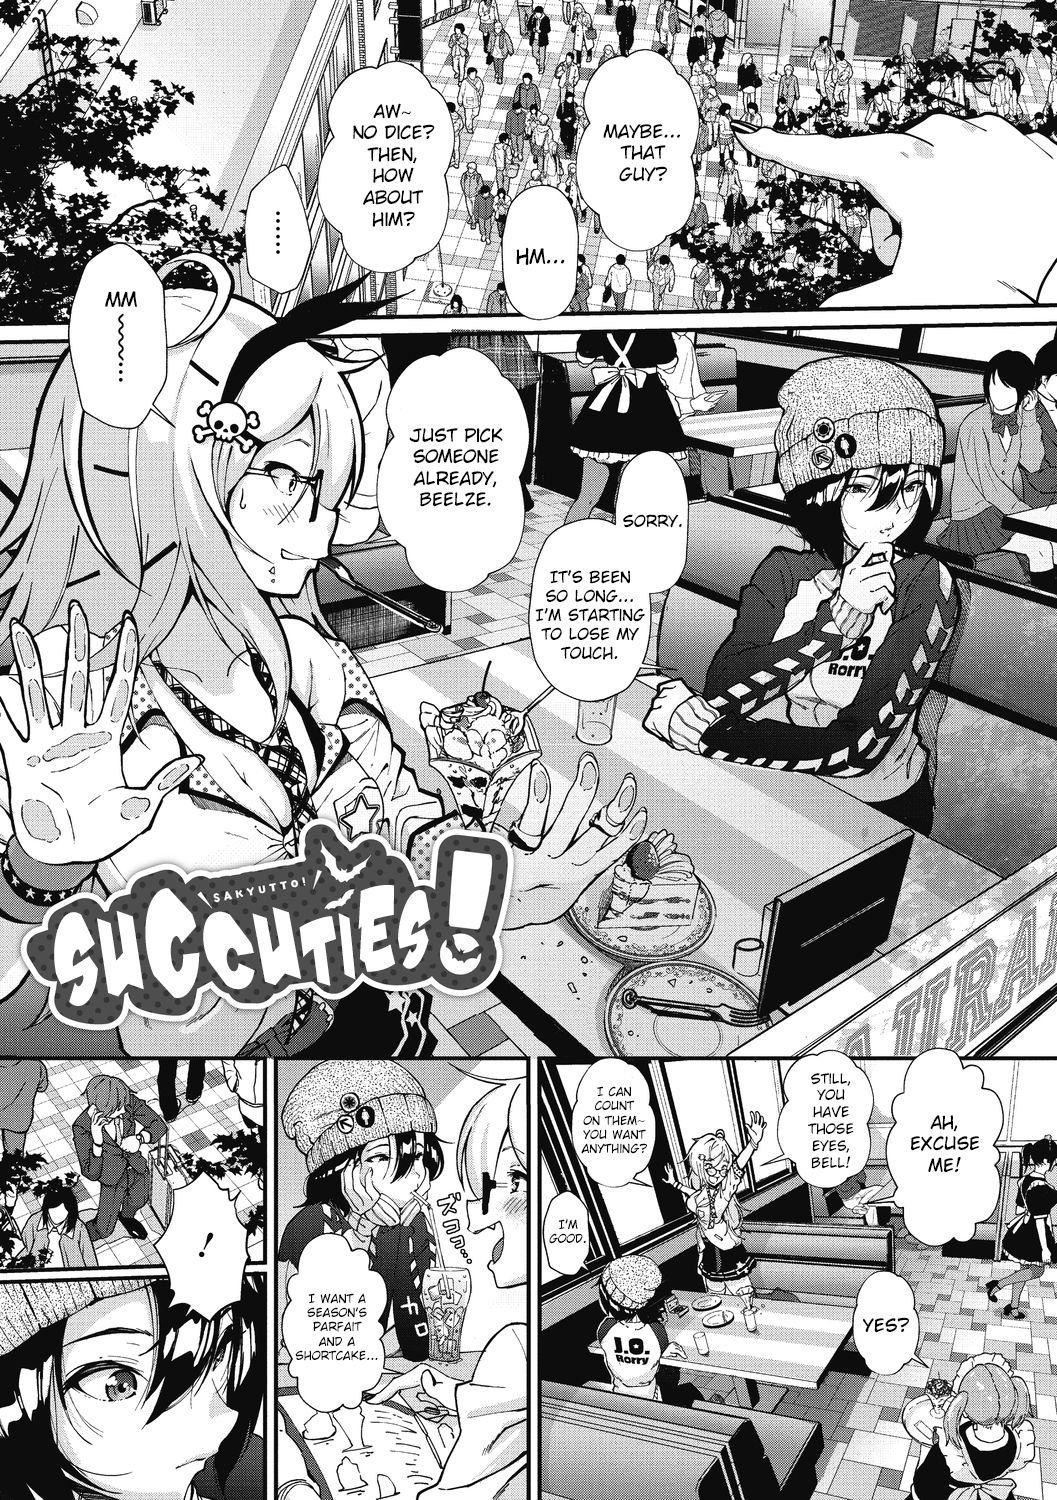 Dad Sakyutto! | Succuties! Girl On Girl - Page 1